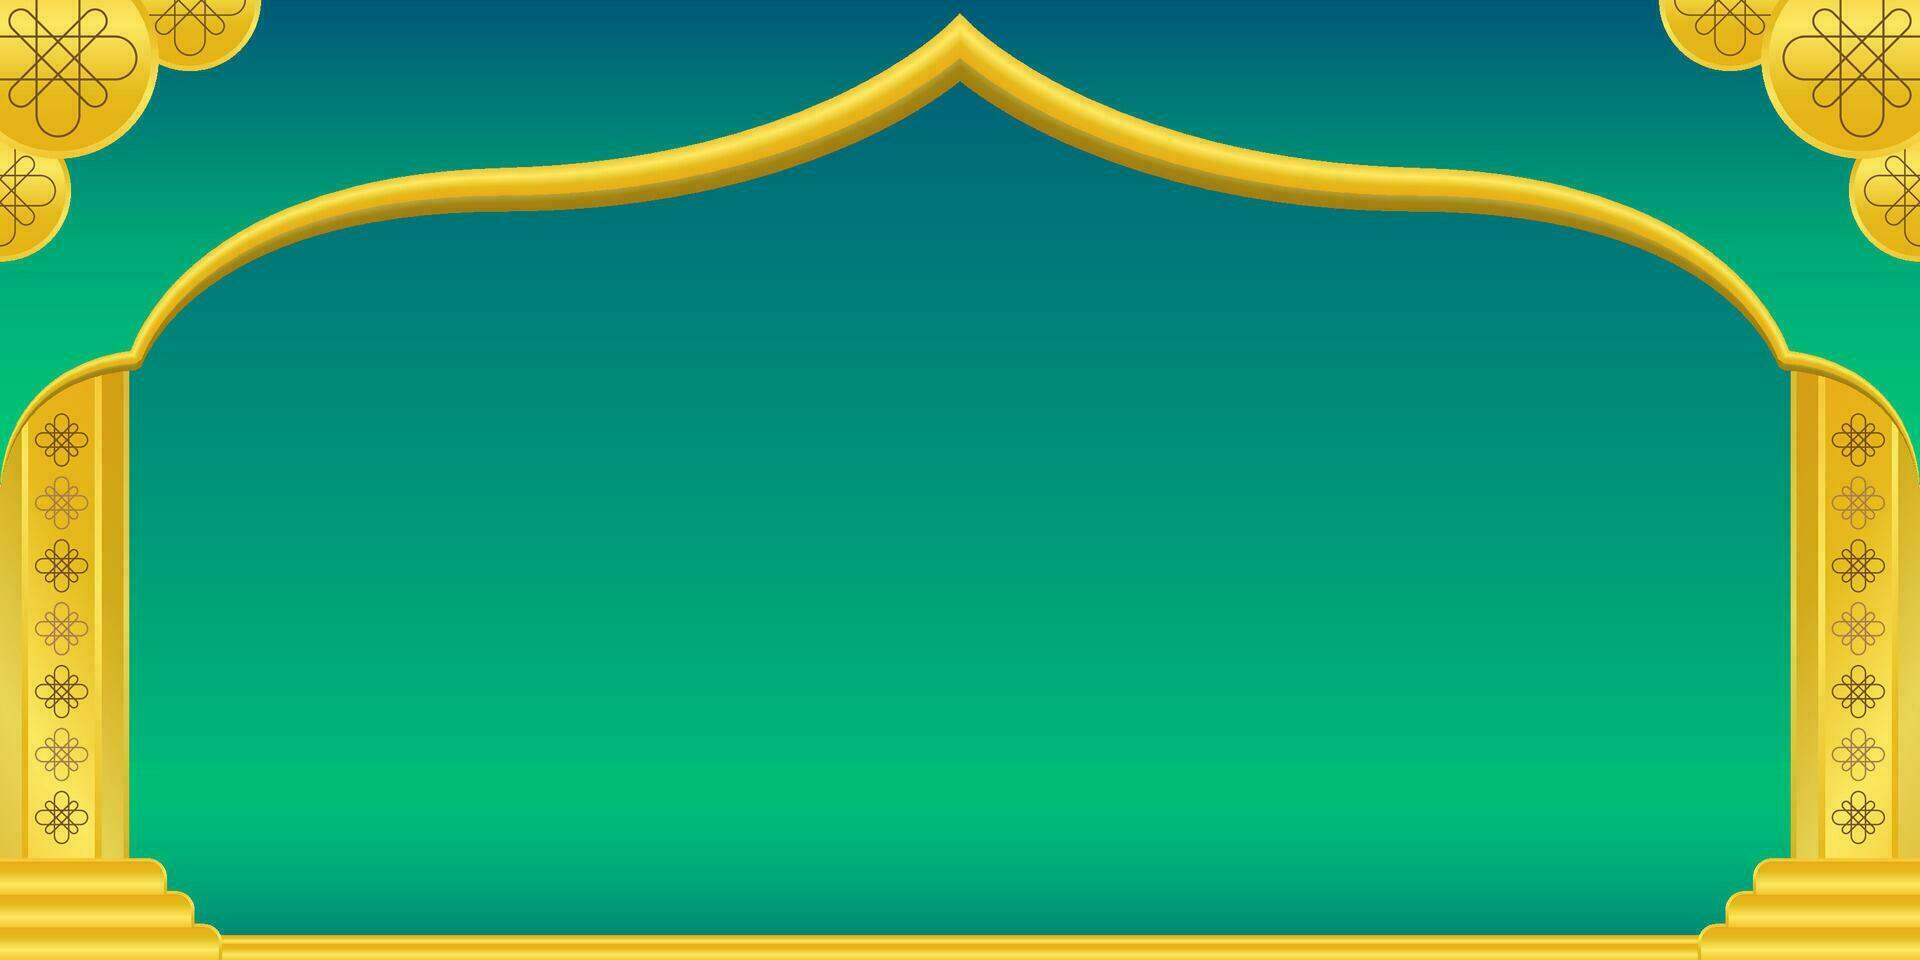 islámico maulid nabi Mahoma Sierra bandera antecedentes vector